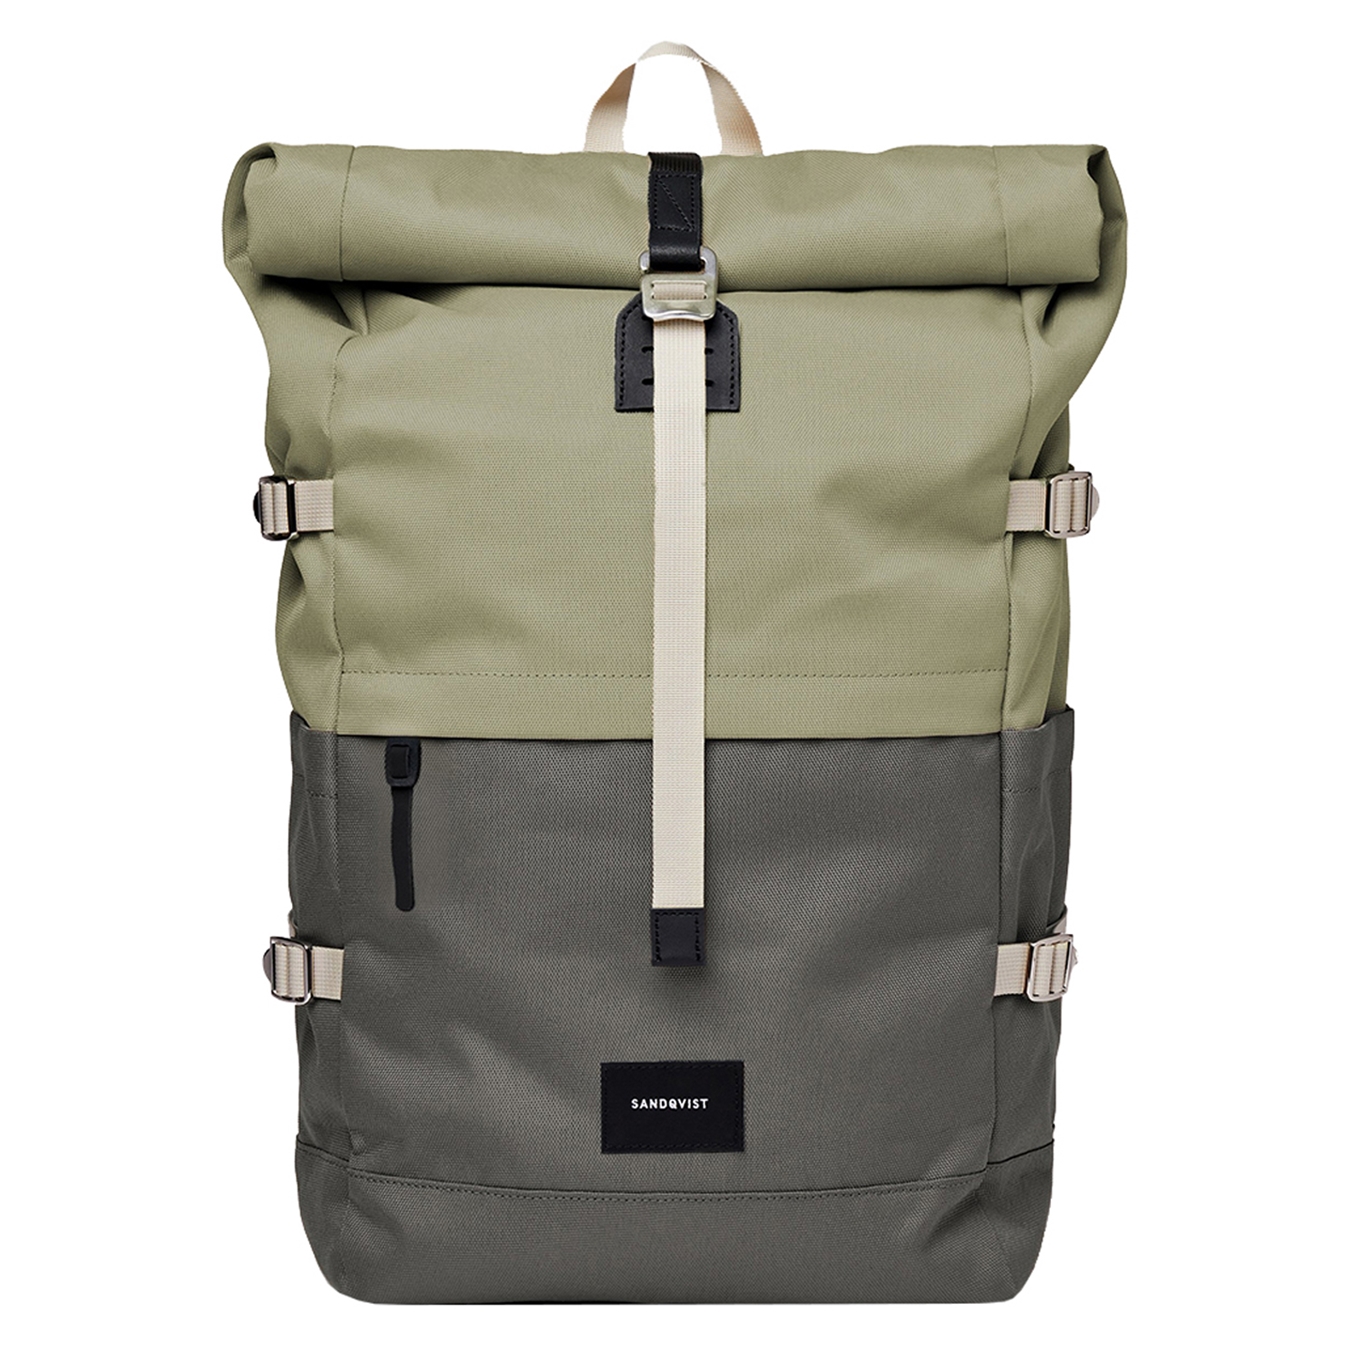 Sandqvist Bernt Backpack multi dew green/night grey backpack